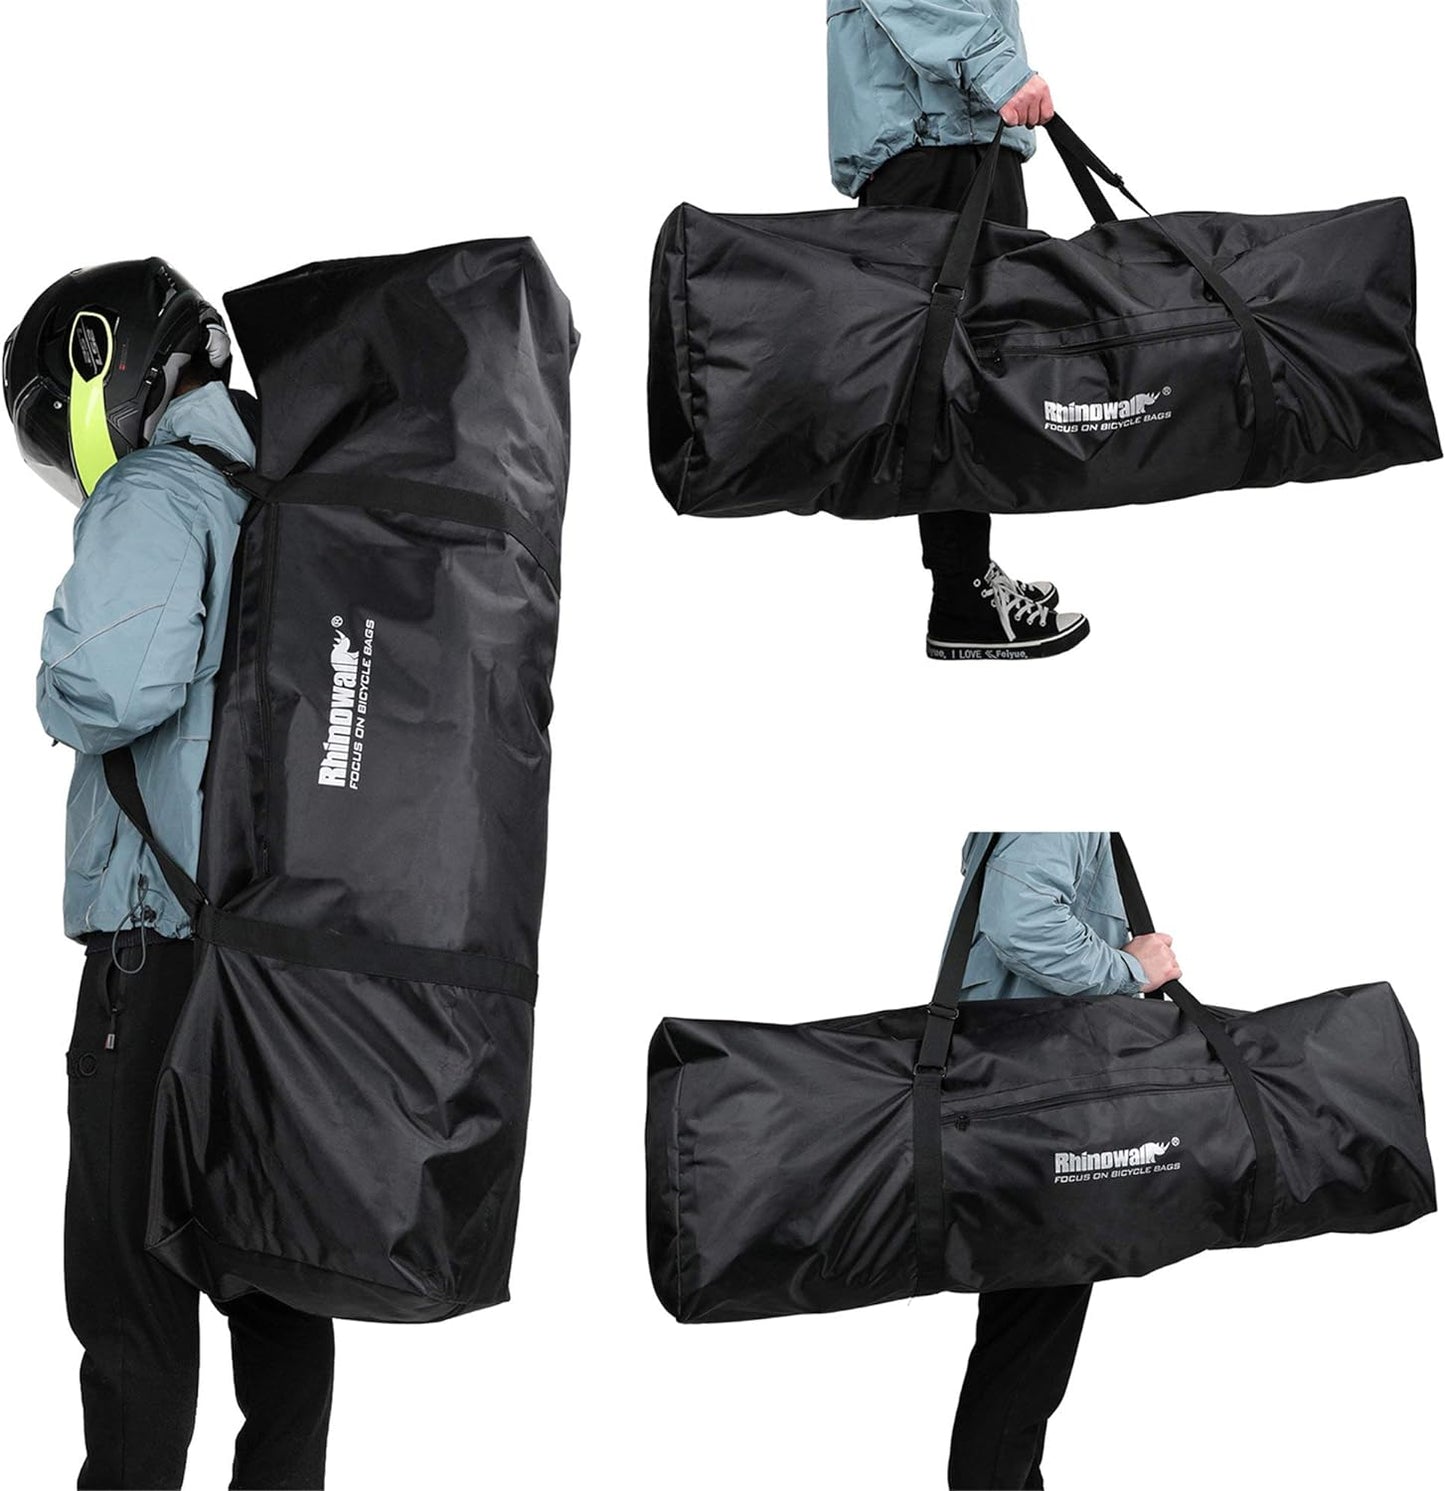 Rhinowalk 電動滑板車 運輸 收納 儲備袋 E-scooter Transport Storage Bag